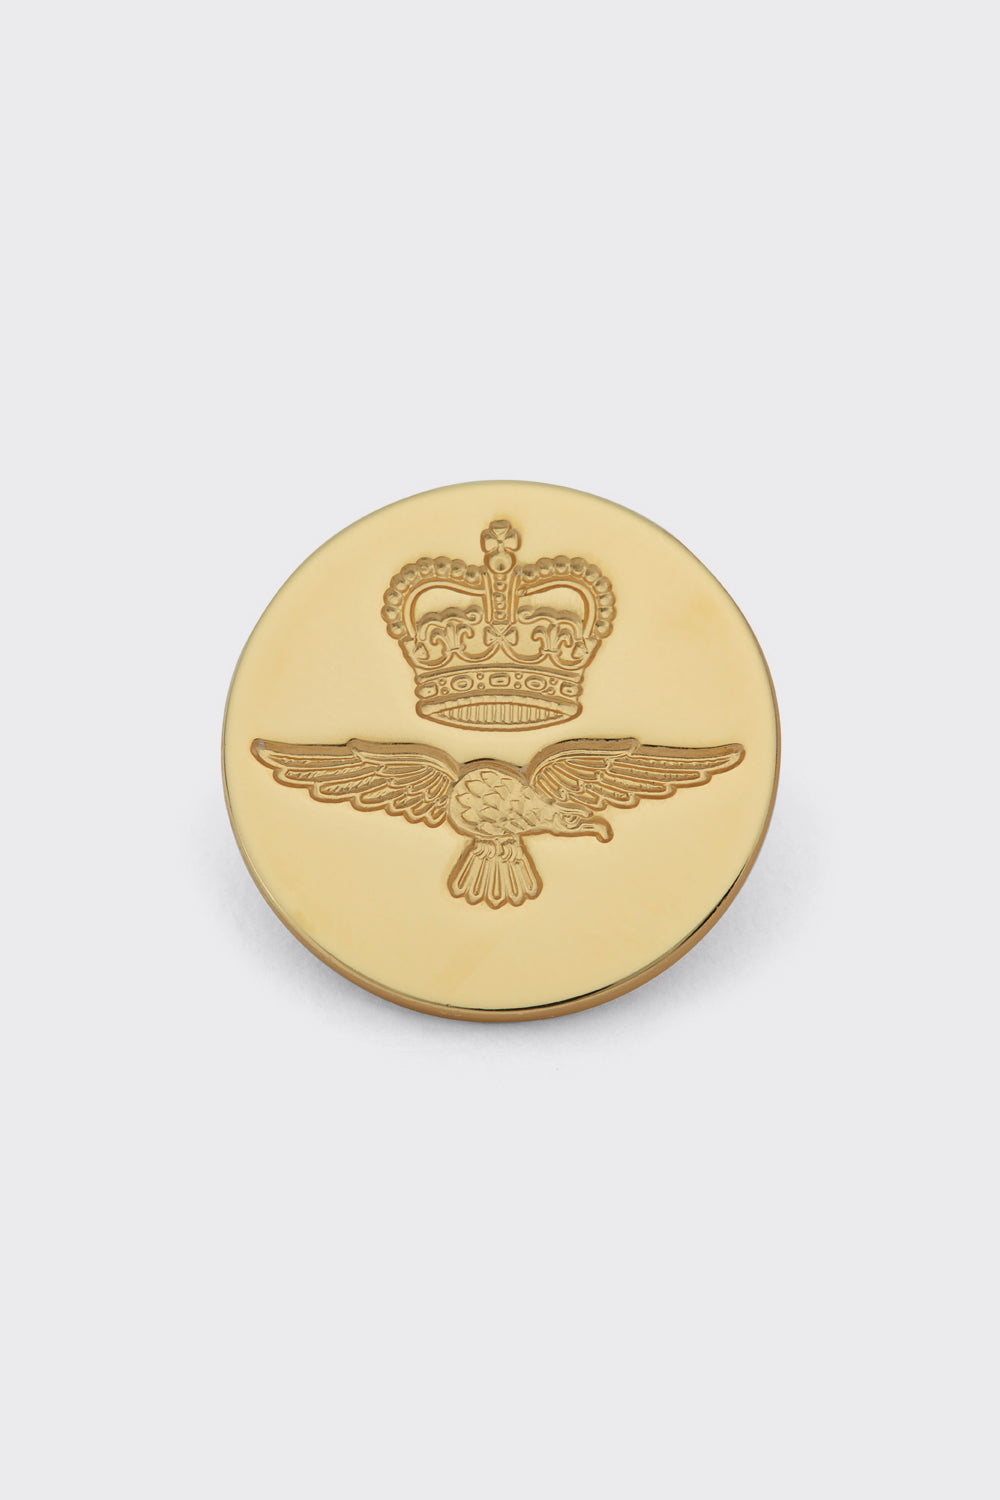 RAF Blazer Button - Flat Indented Wings Gilt